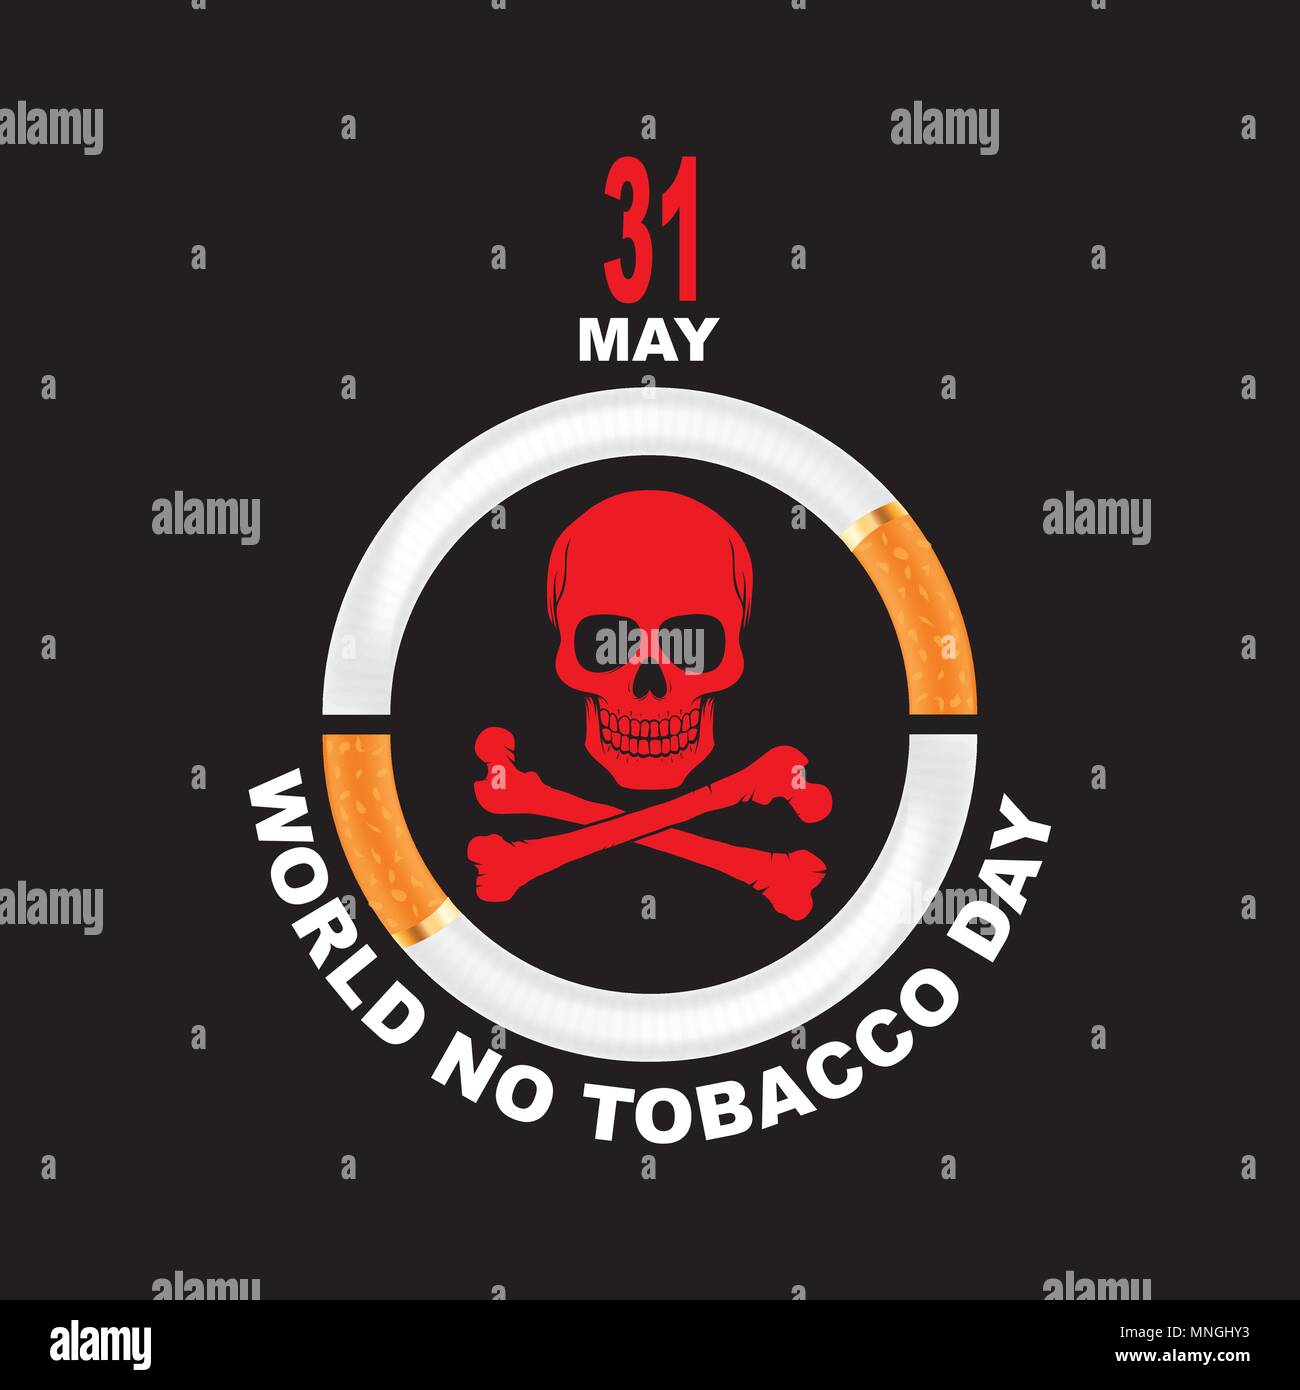 World's No Tobacco Day – India NCC